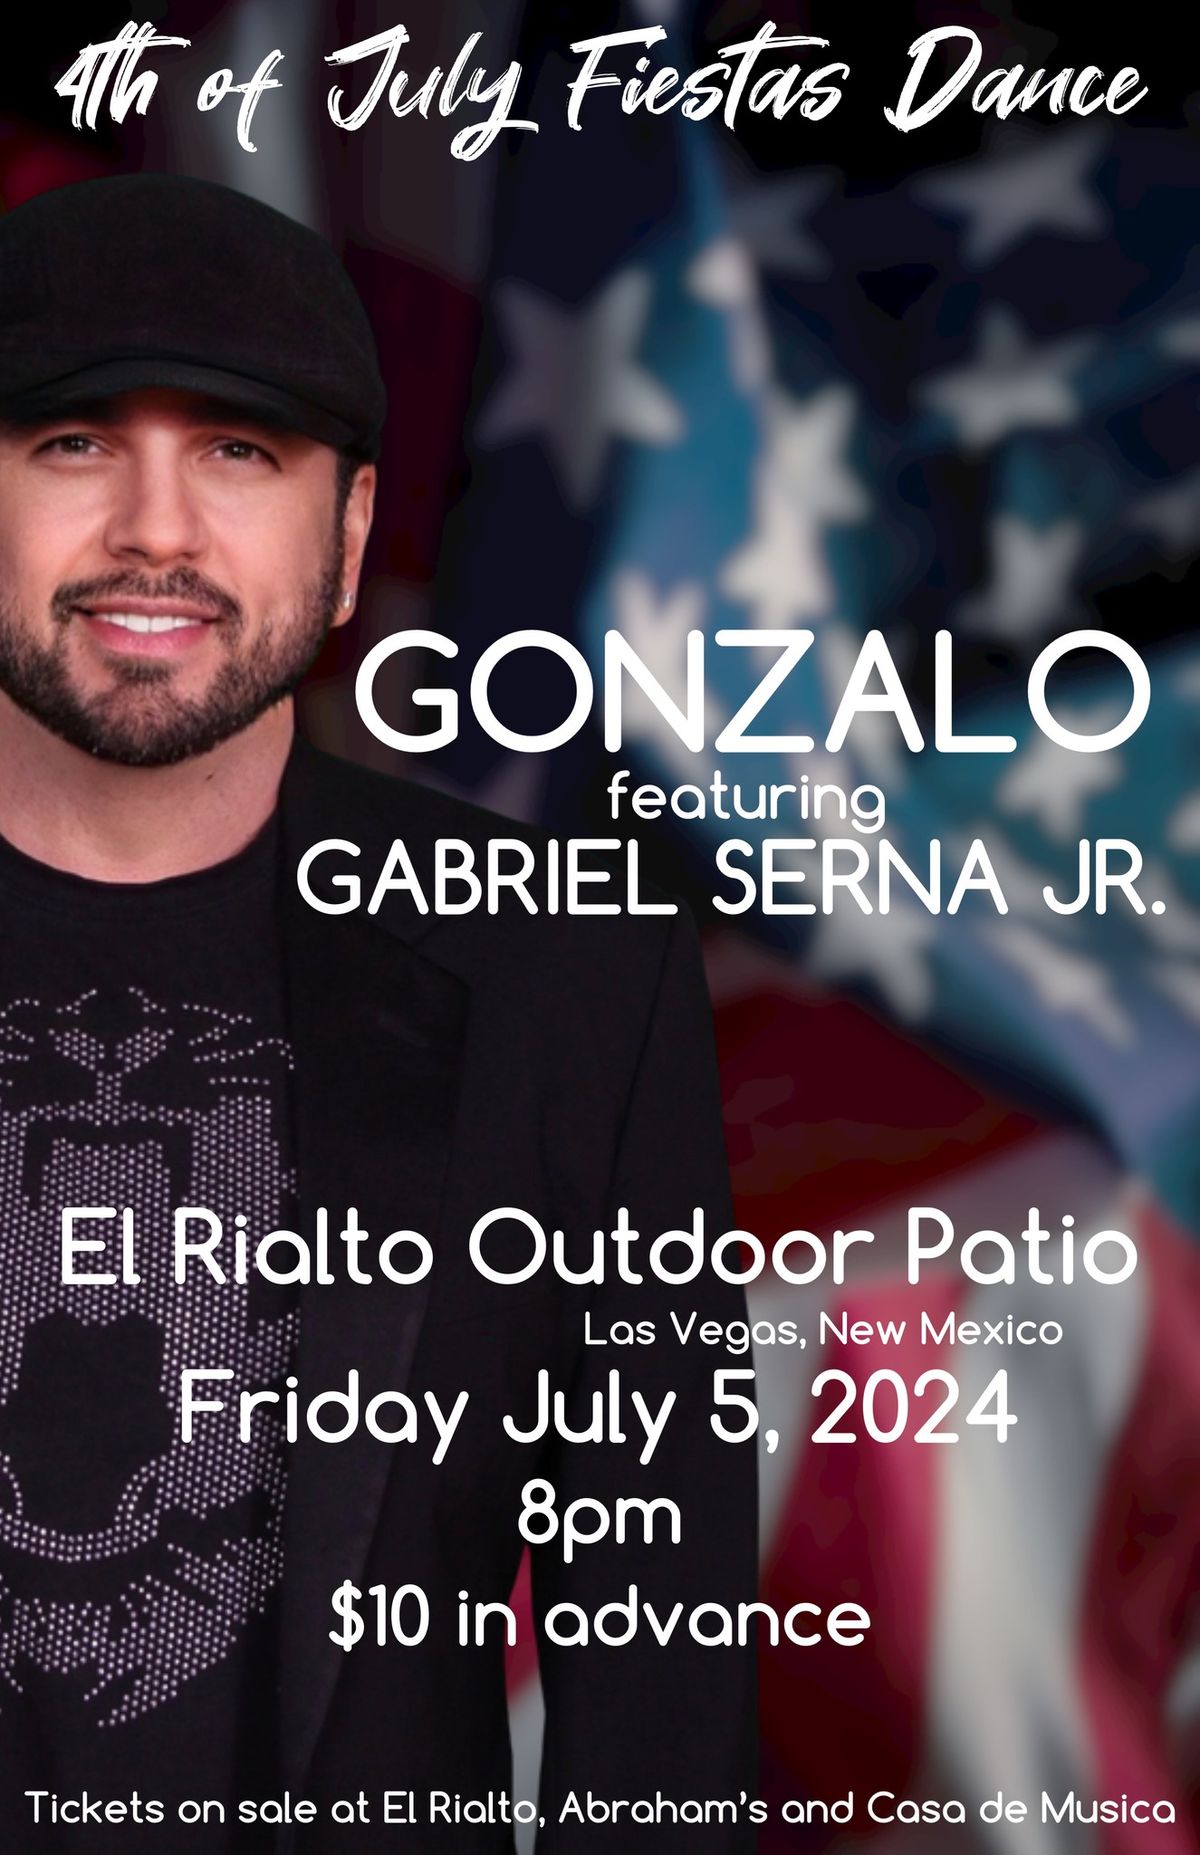 4th of July Fiestas with Gonzalo featuring Gabriel Serna Jr.